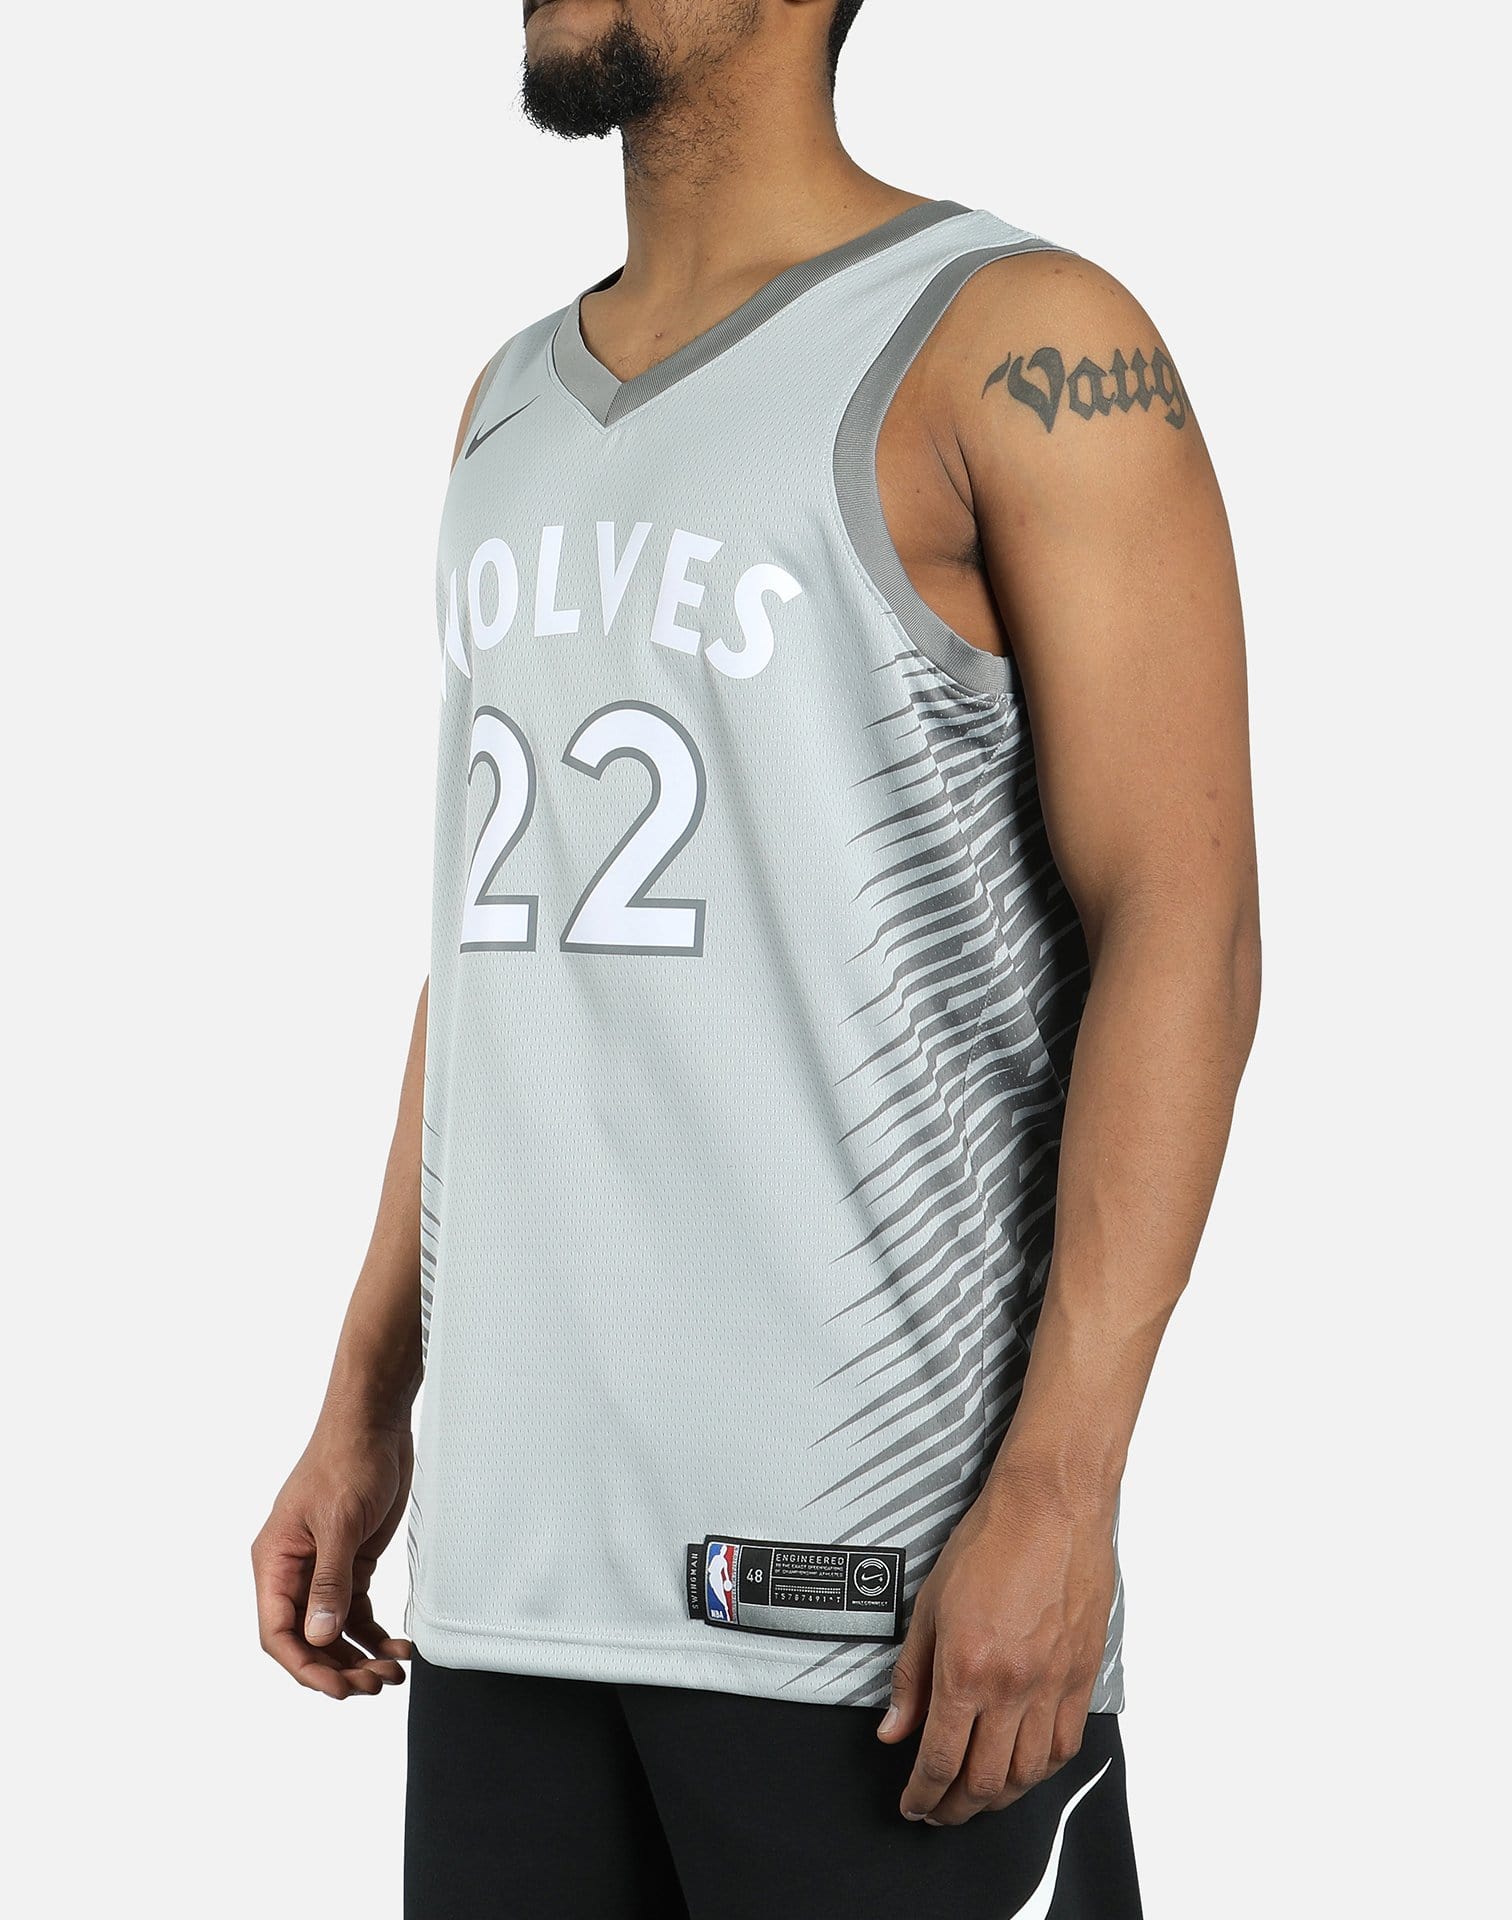 Fanatics NBA Andrew Wiggins #22 Timberwolves Youth Large Jersey NWT Warriors